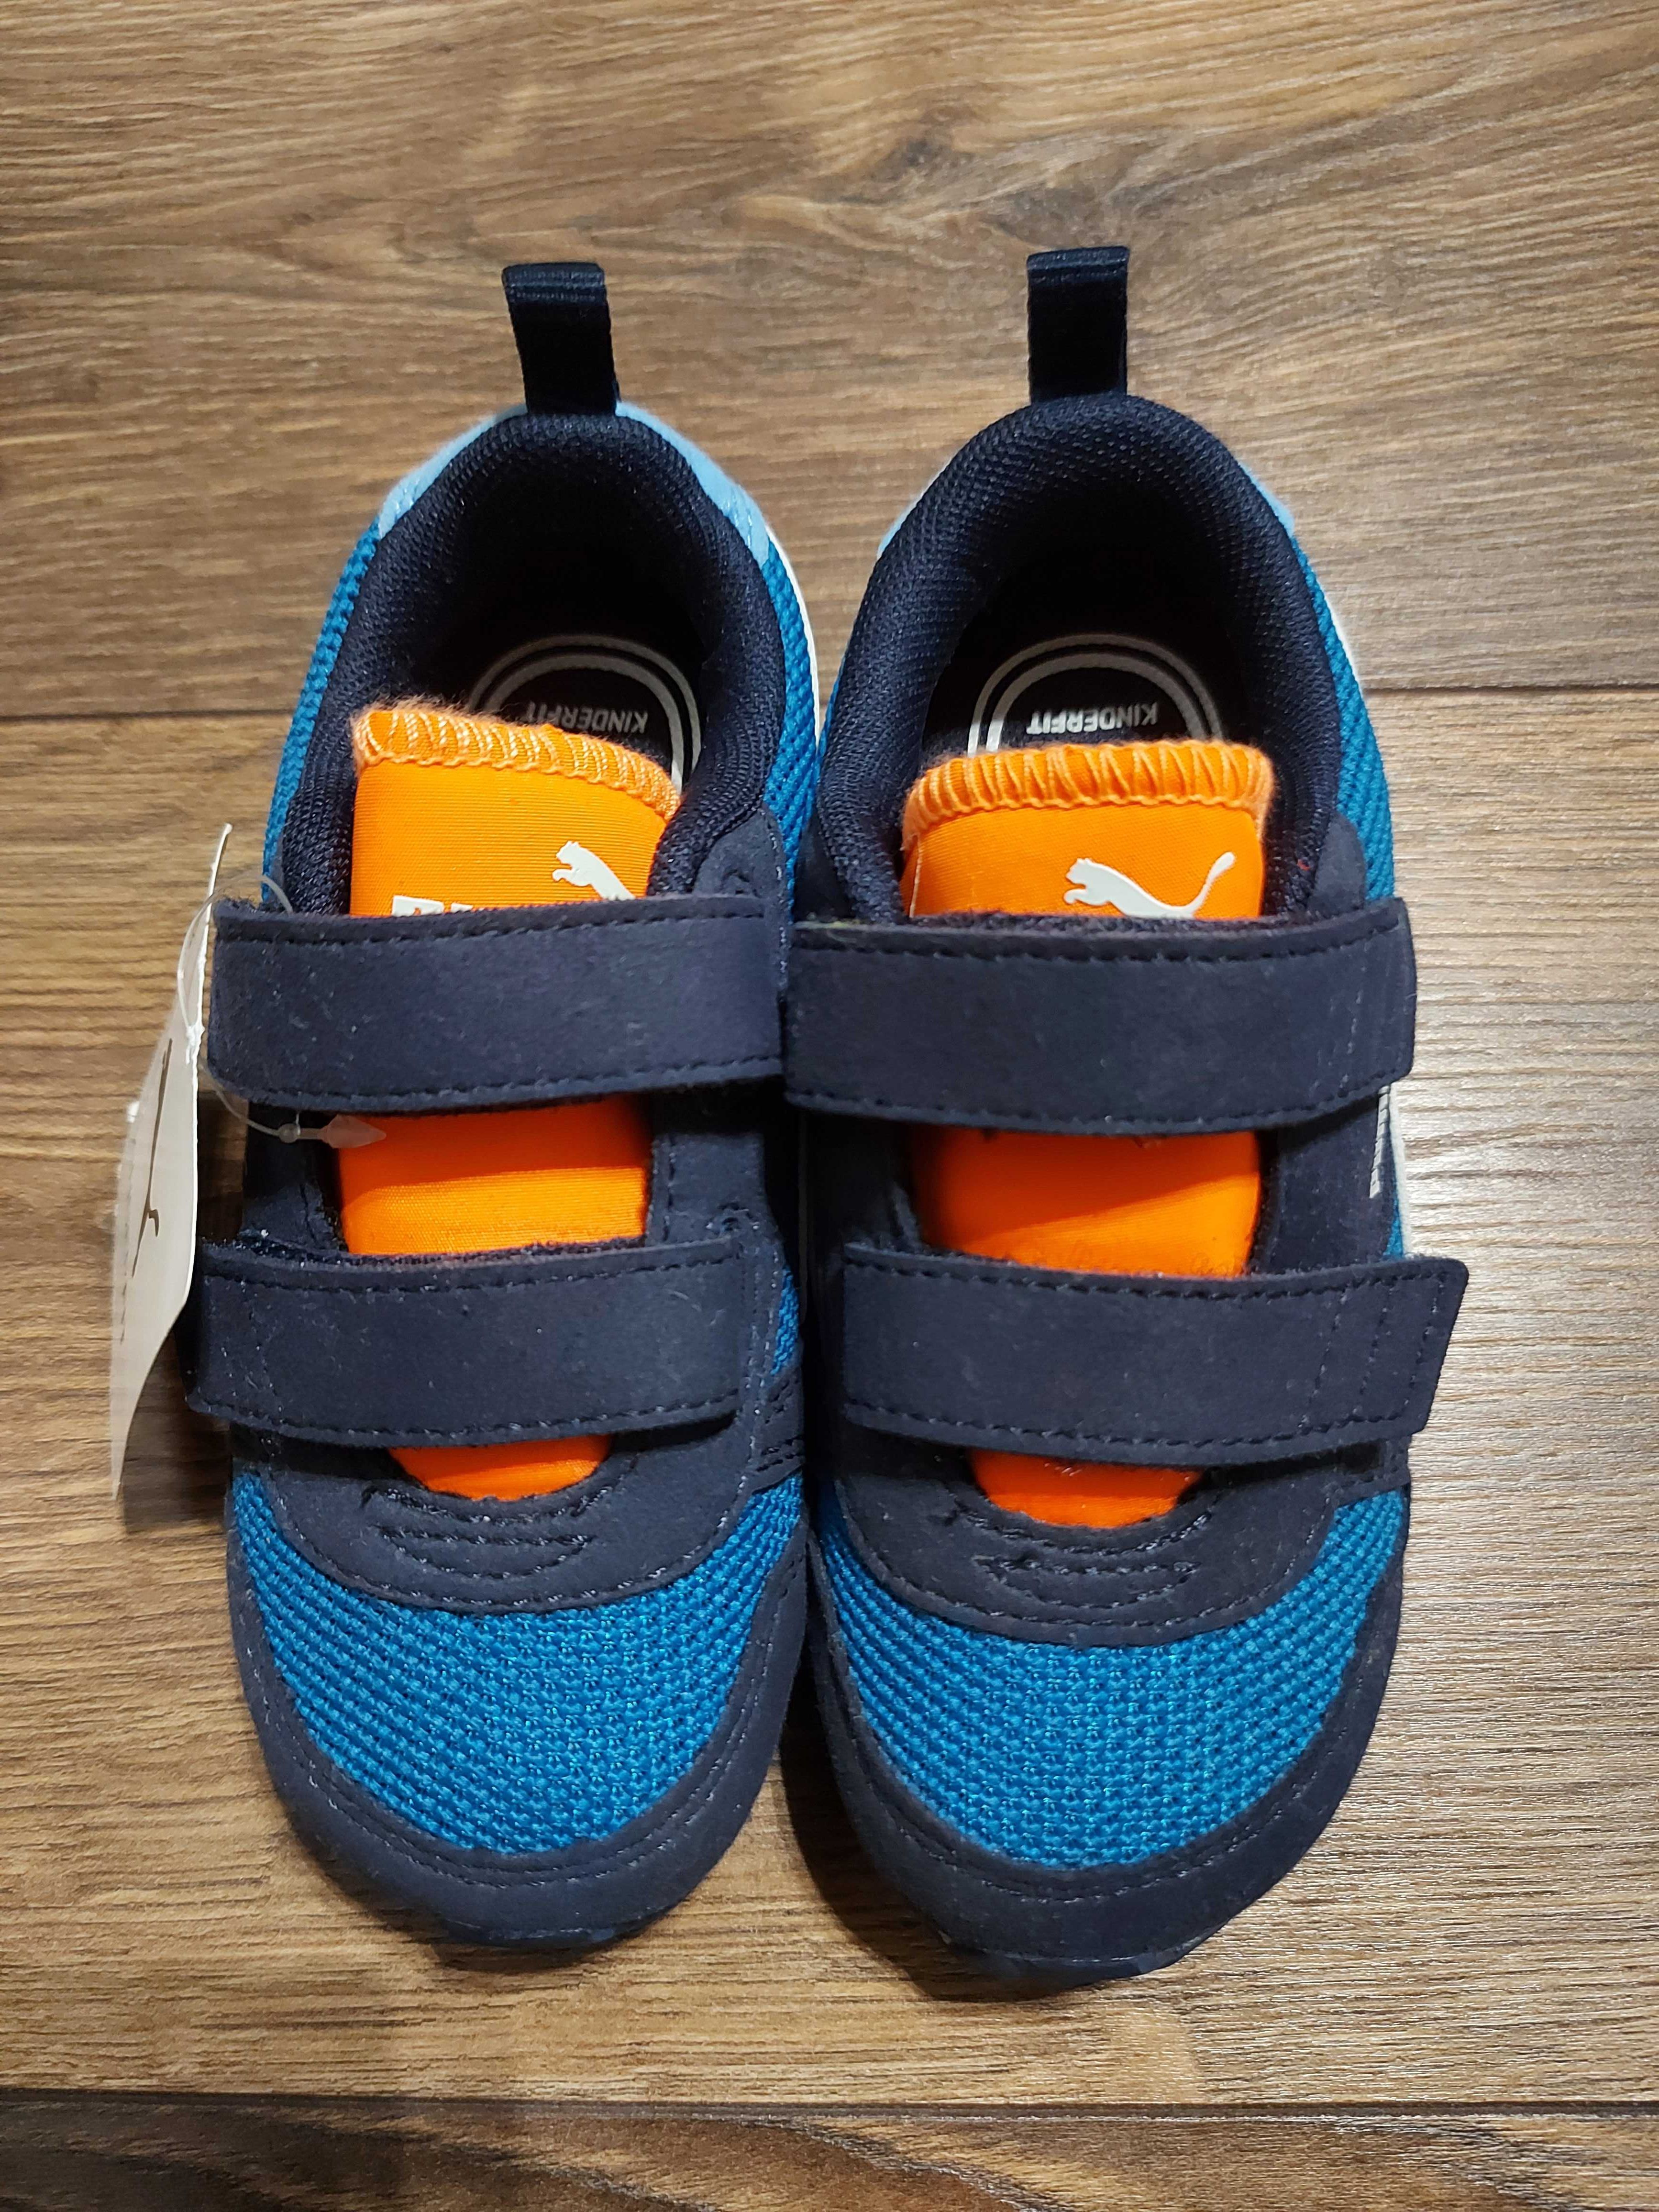 Adidasi Puma Kinderfit copii, noi, nr.25, albastru/orange